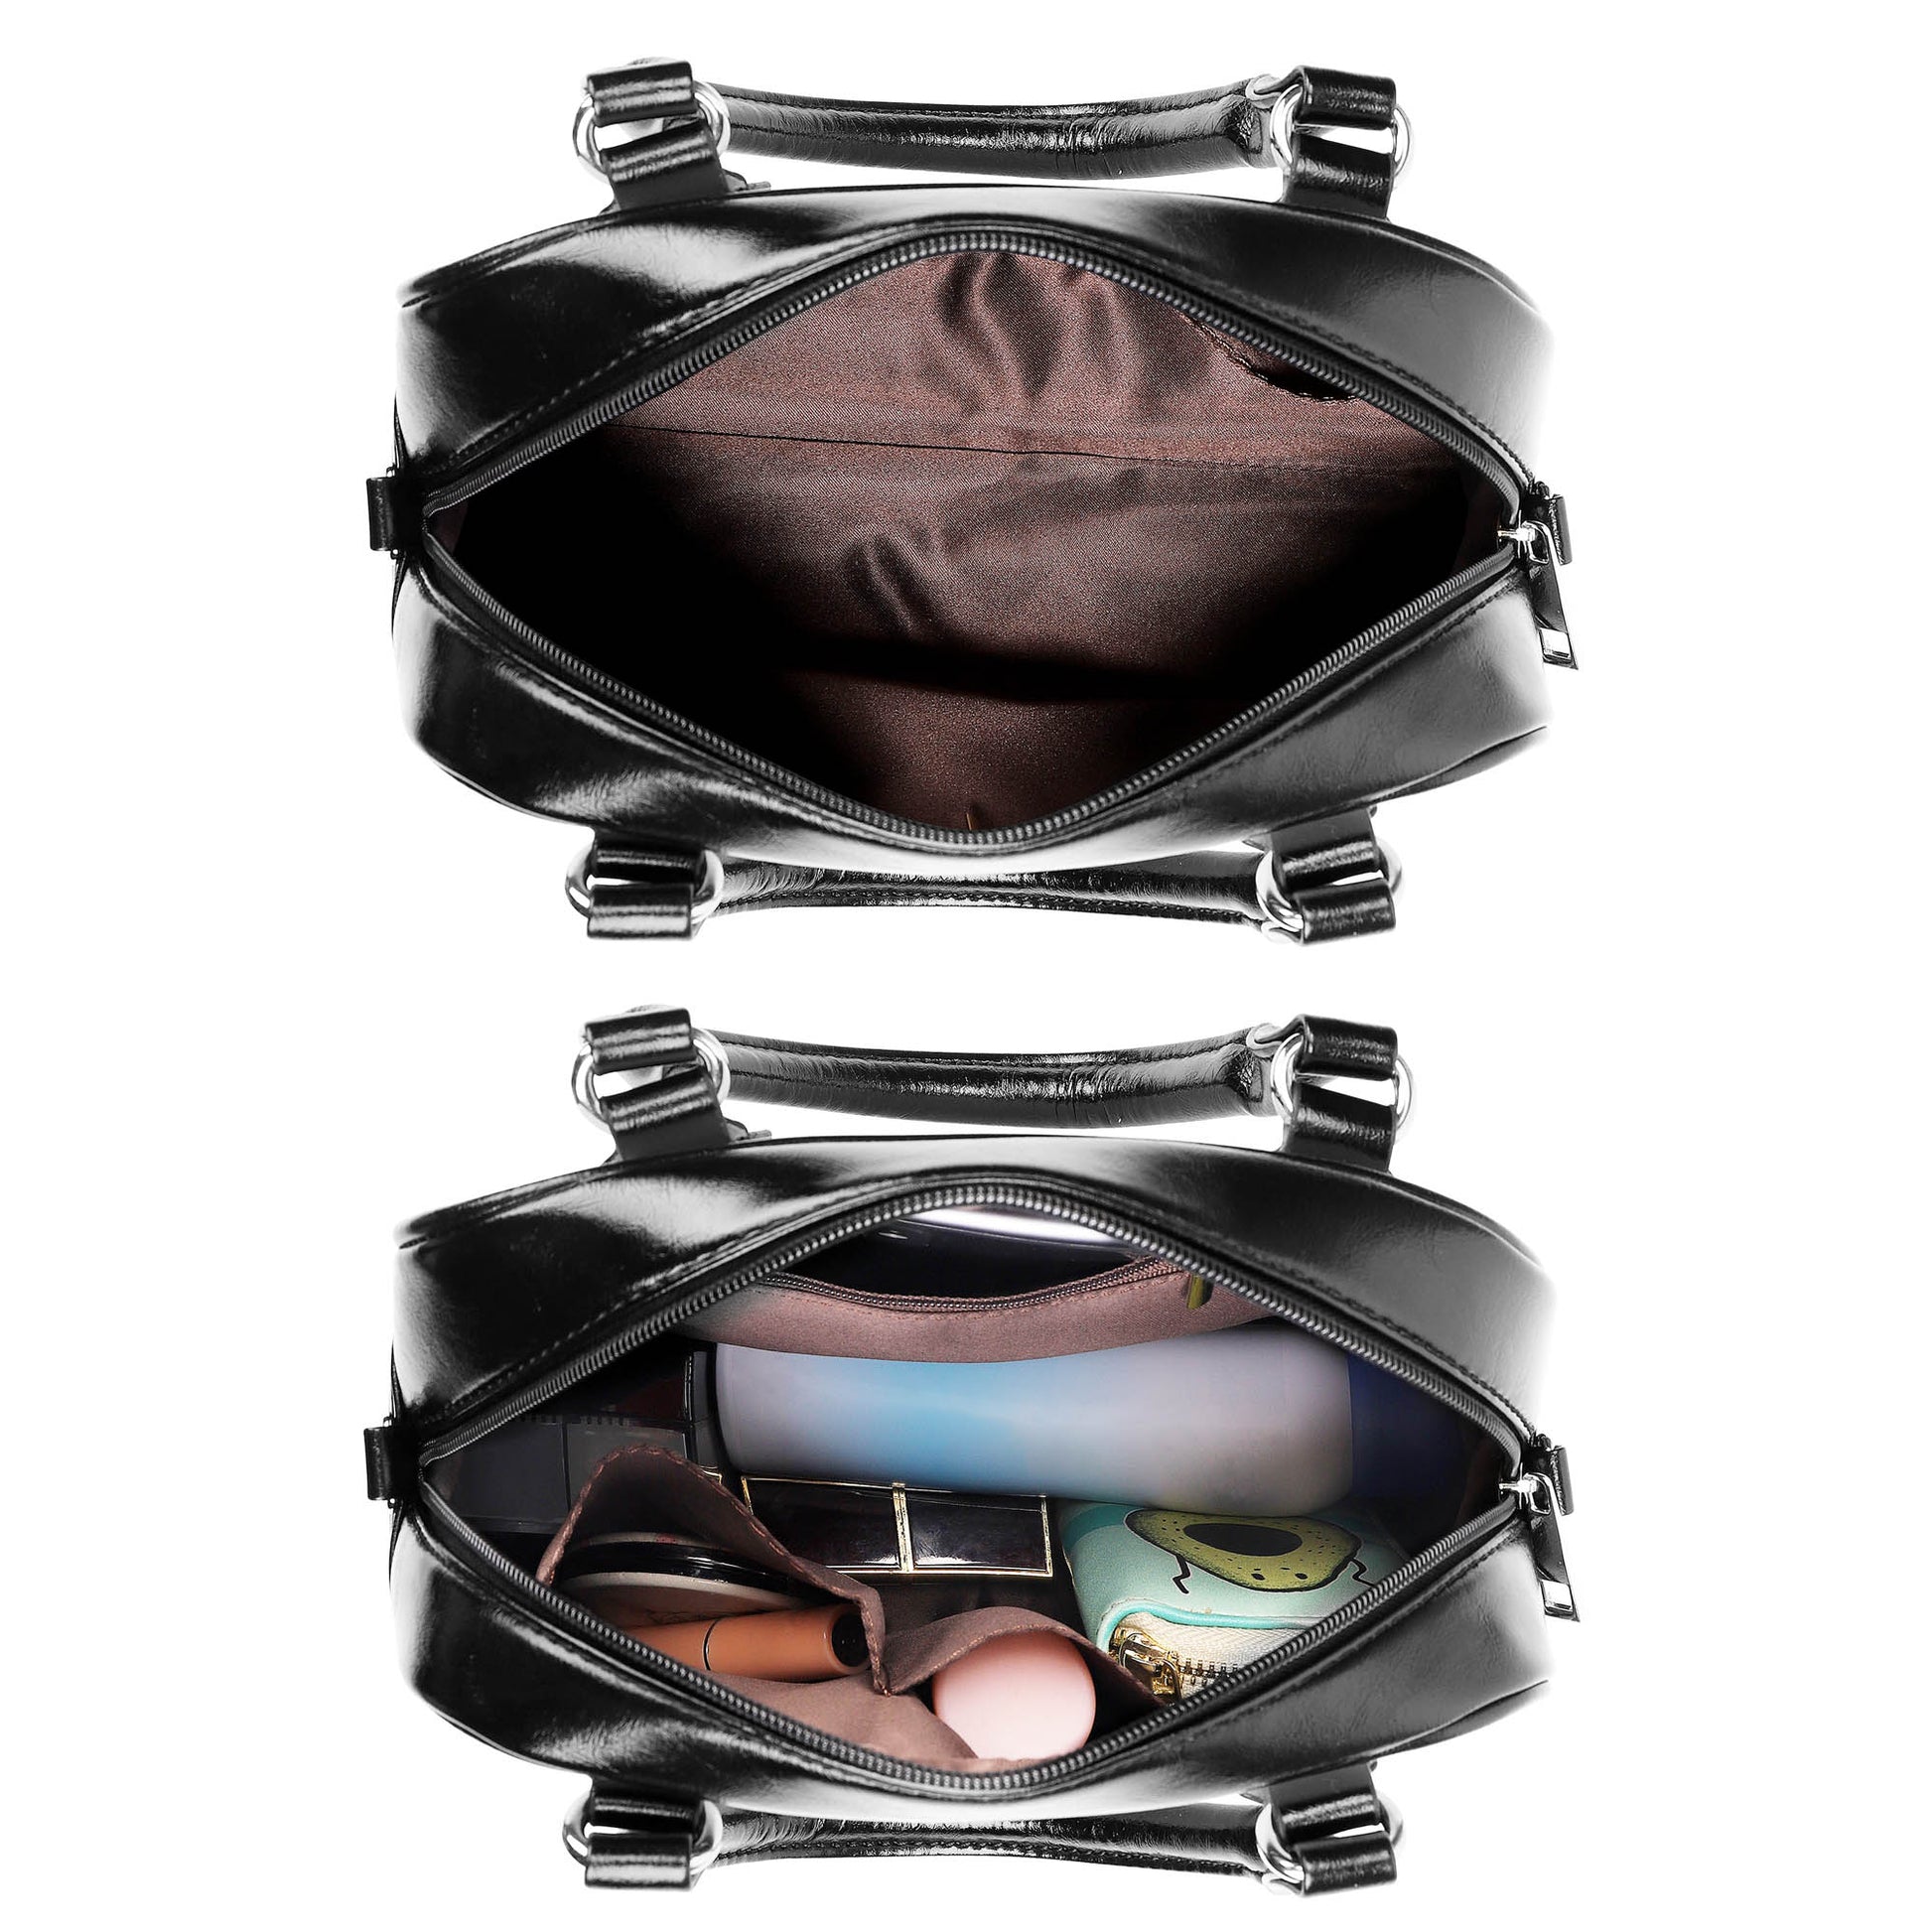 MacLachlan Modern Tartan Shoulder Handbags with Family Crest - Tartanvibesclothing